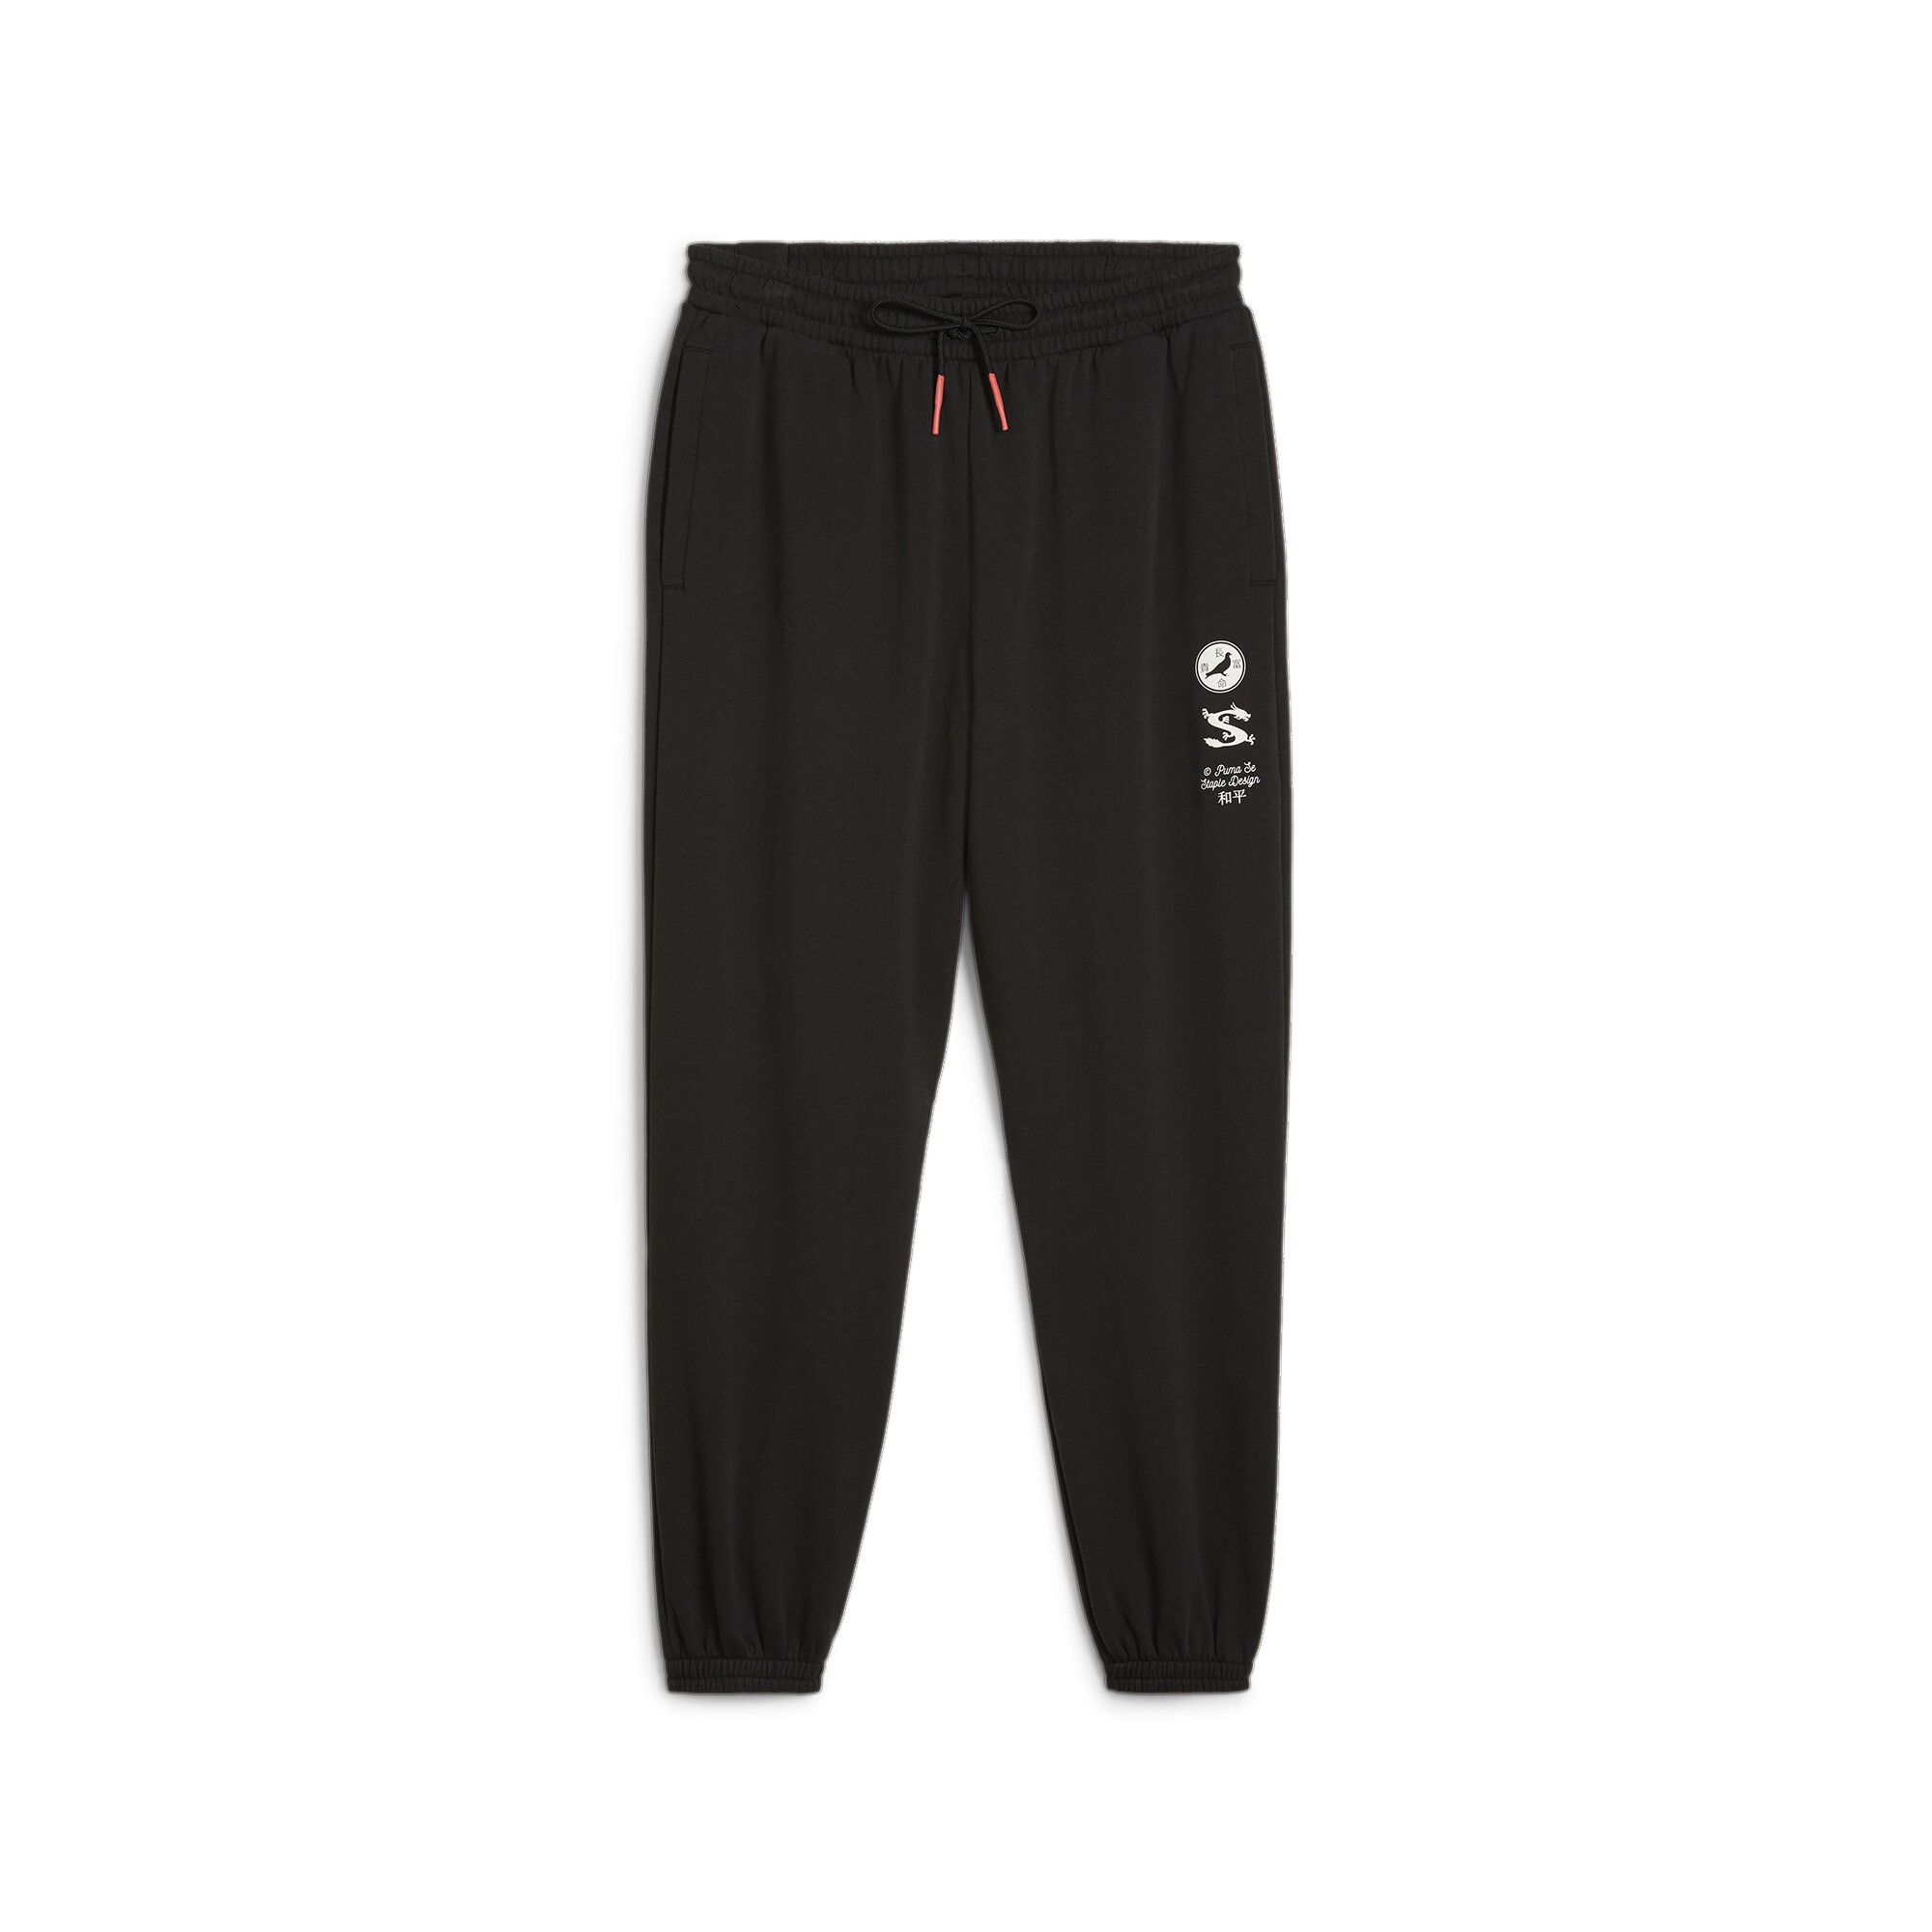 Men's Puma X STAPLE Track Pants, Black, Size XL, Clothing